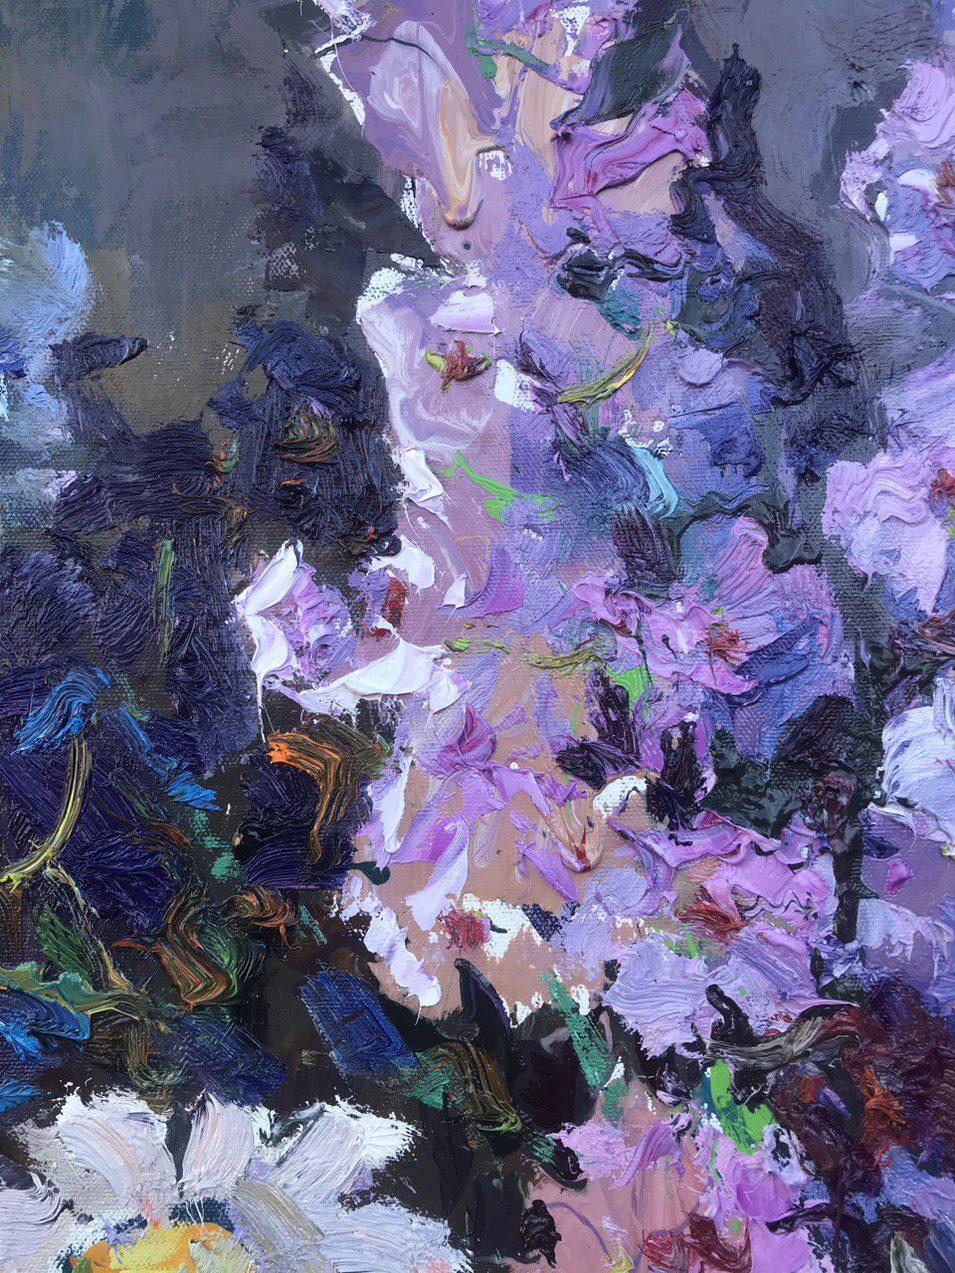 Artist: Oksana Kalenyuk 
Work: Original oil painting, handmade artwork, one of a kind 
Medium: Oil on canvas 
Year: 2022
Style: Impressionism
Title: Morning Flowers
Size: 31.5